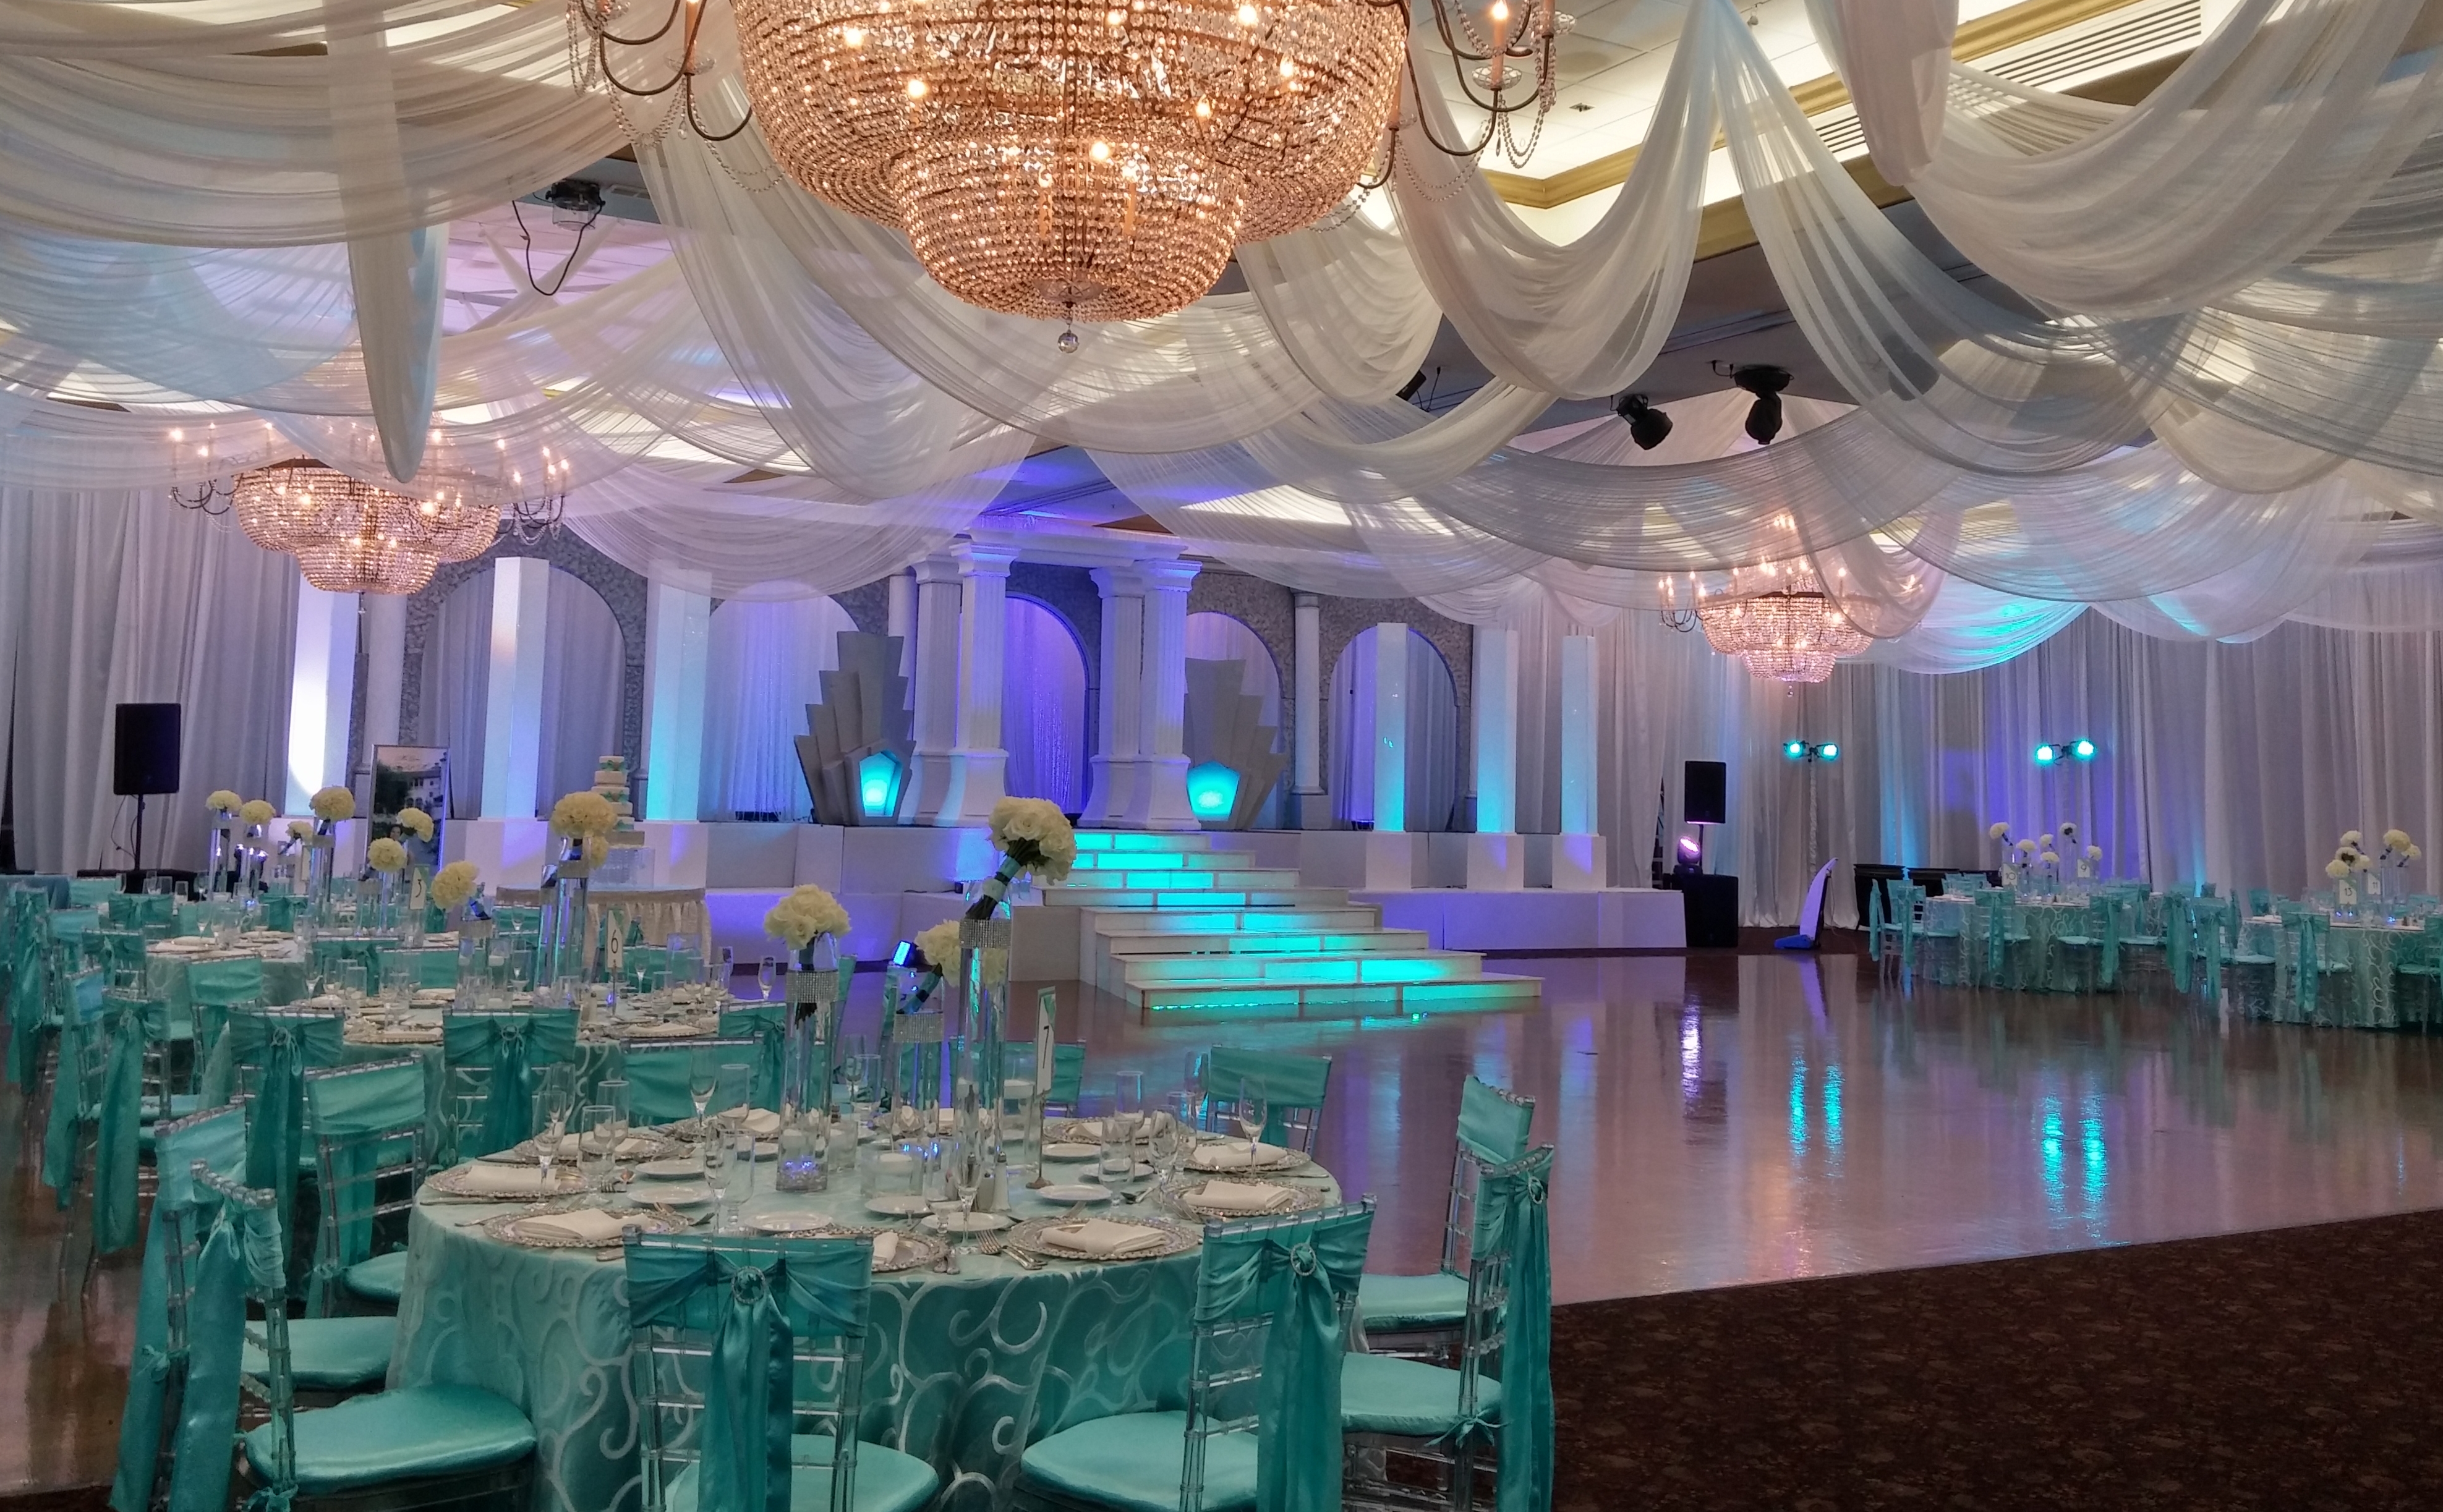 The Signature Grand Wedding Venue in South Florida | PartySpace